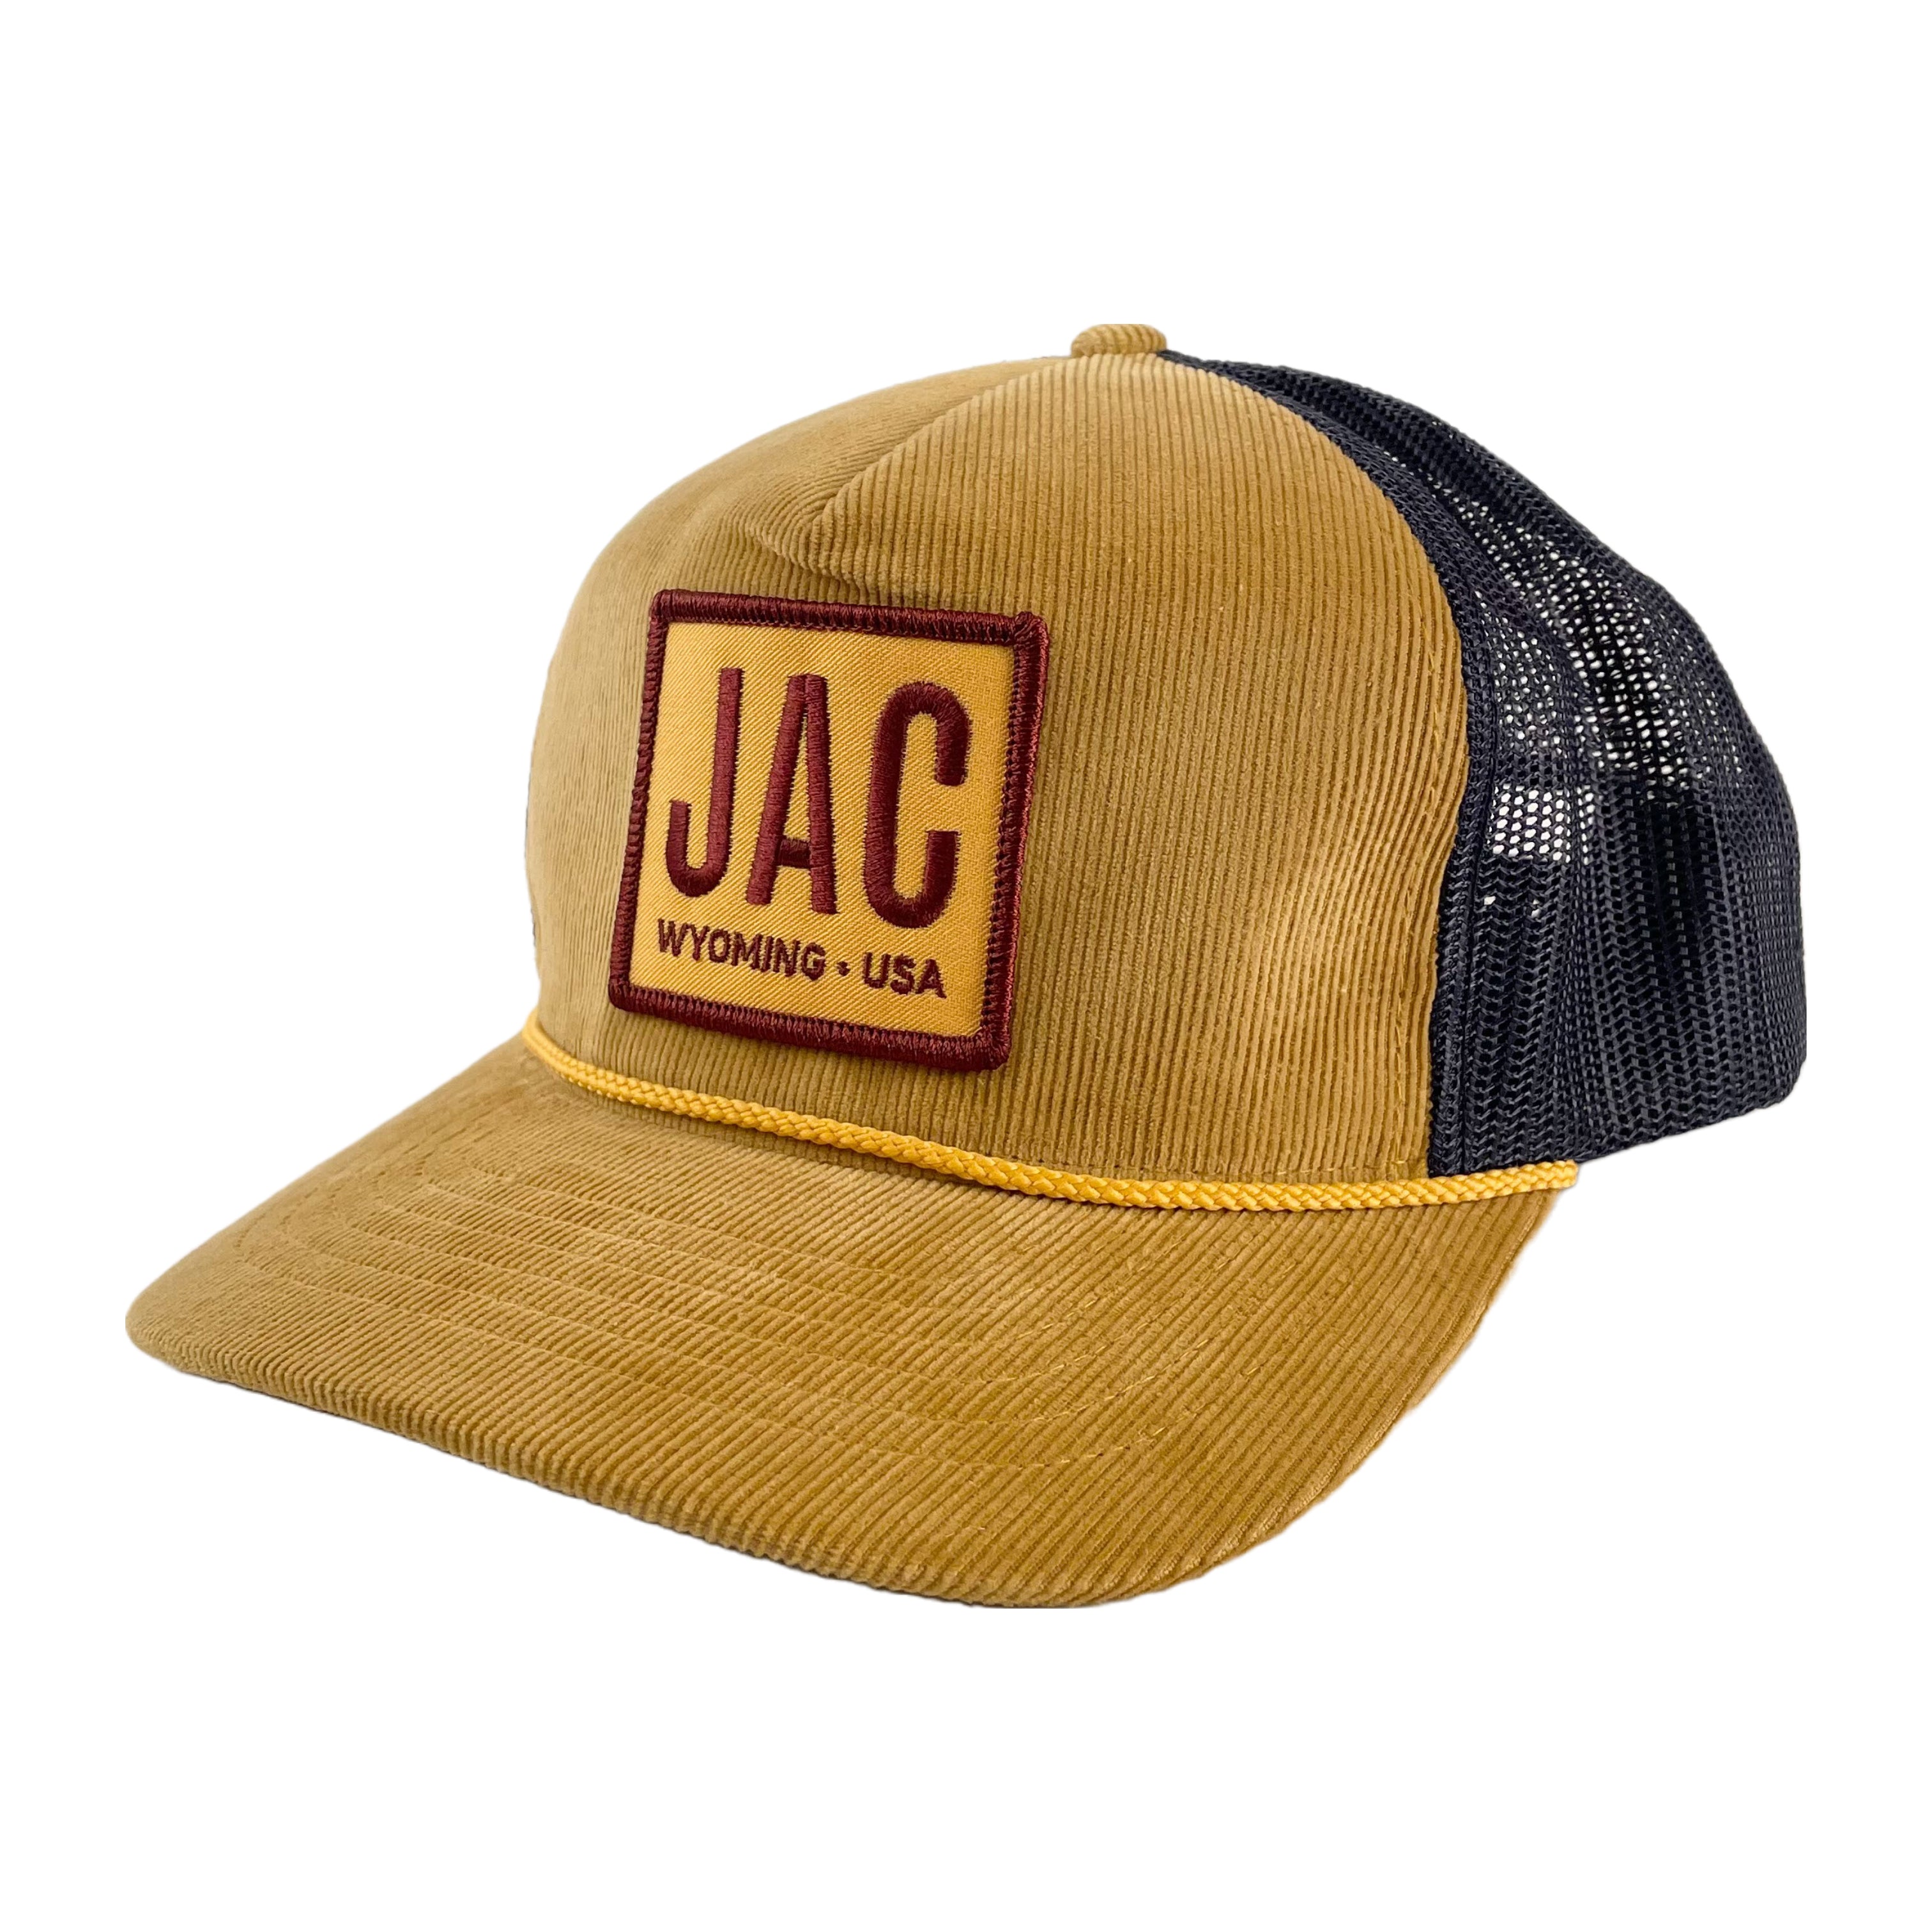 JAC Wyoming USA Patch - Mesh Back Corduroy Hat